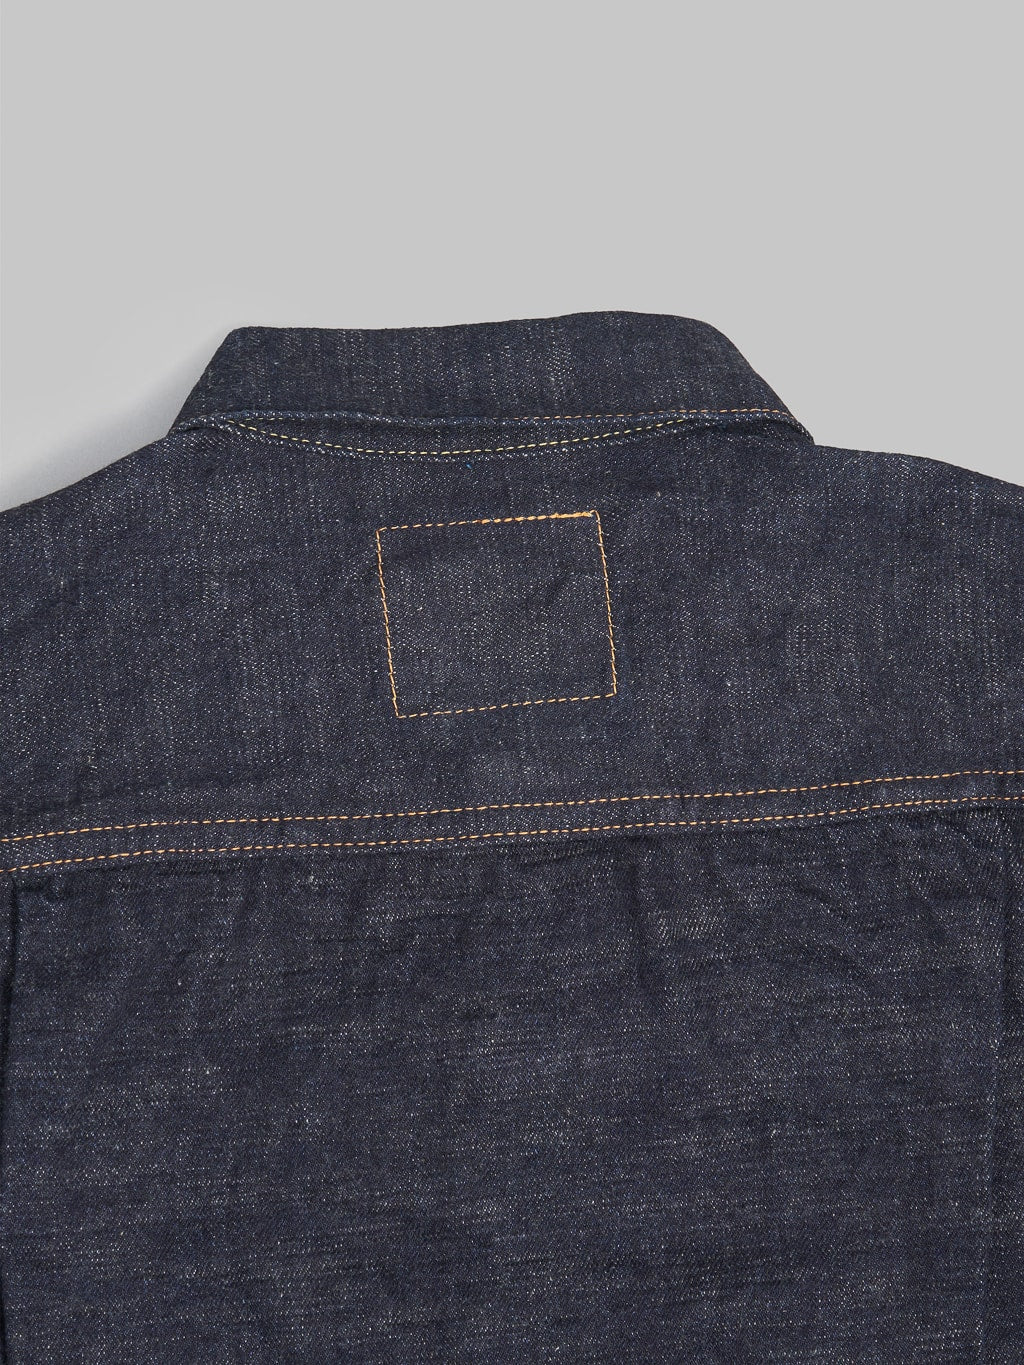 The Strike Gold 15oz Slub Grey Weft Type II Denim Jacket stitching